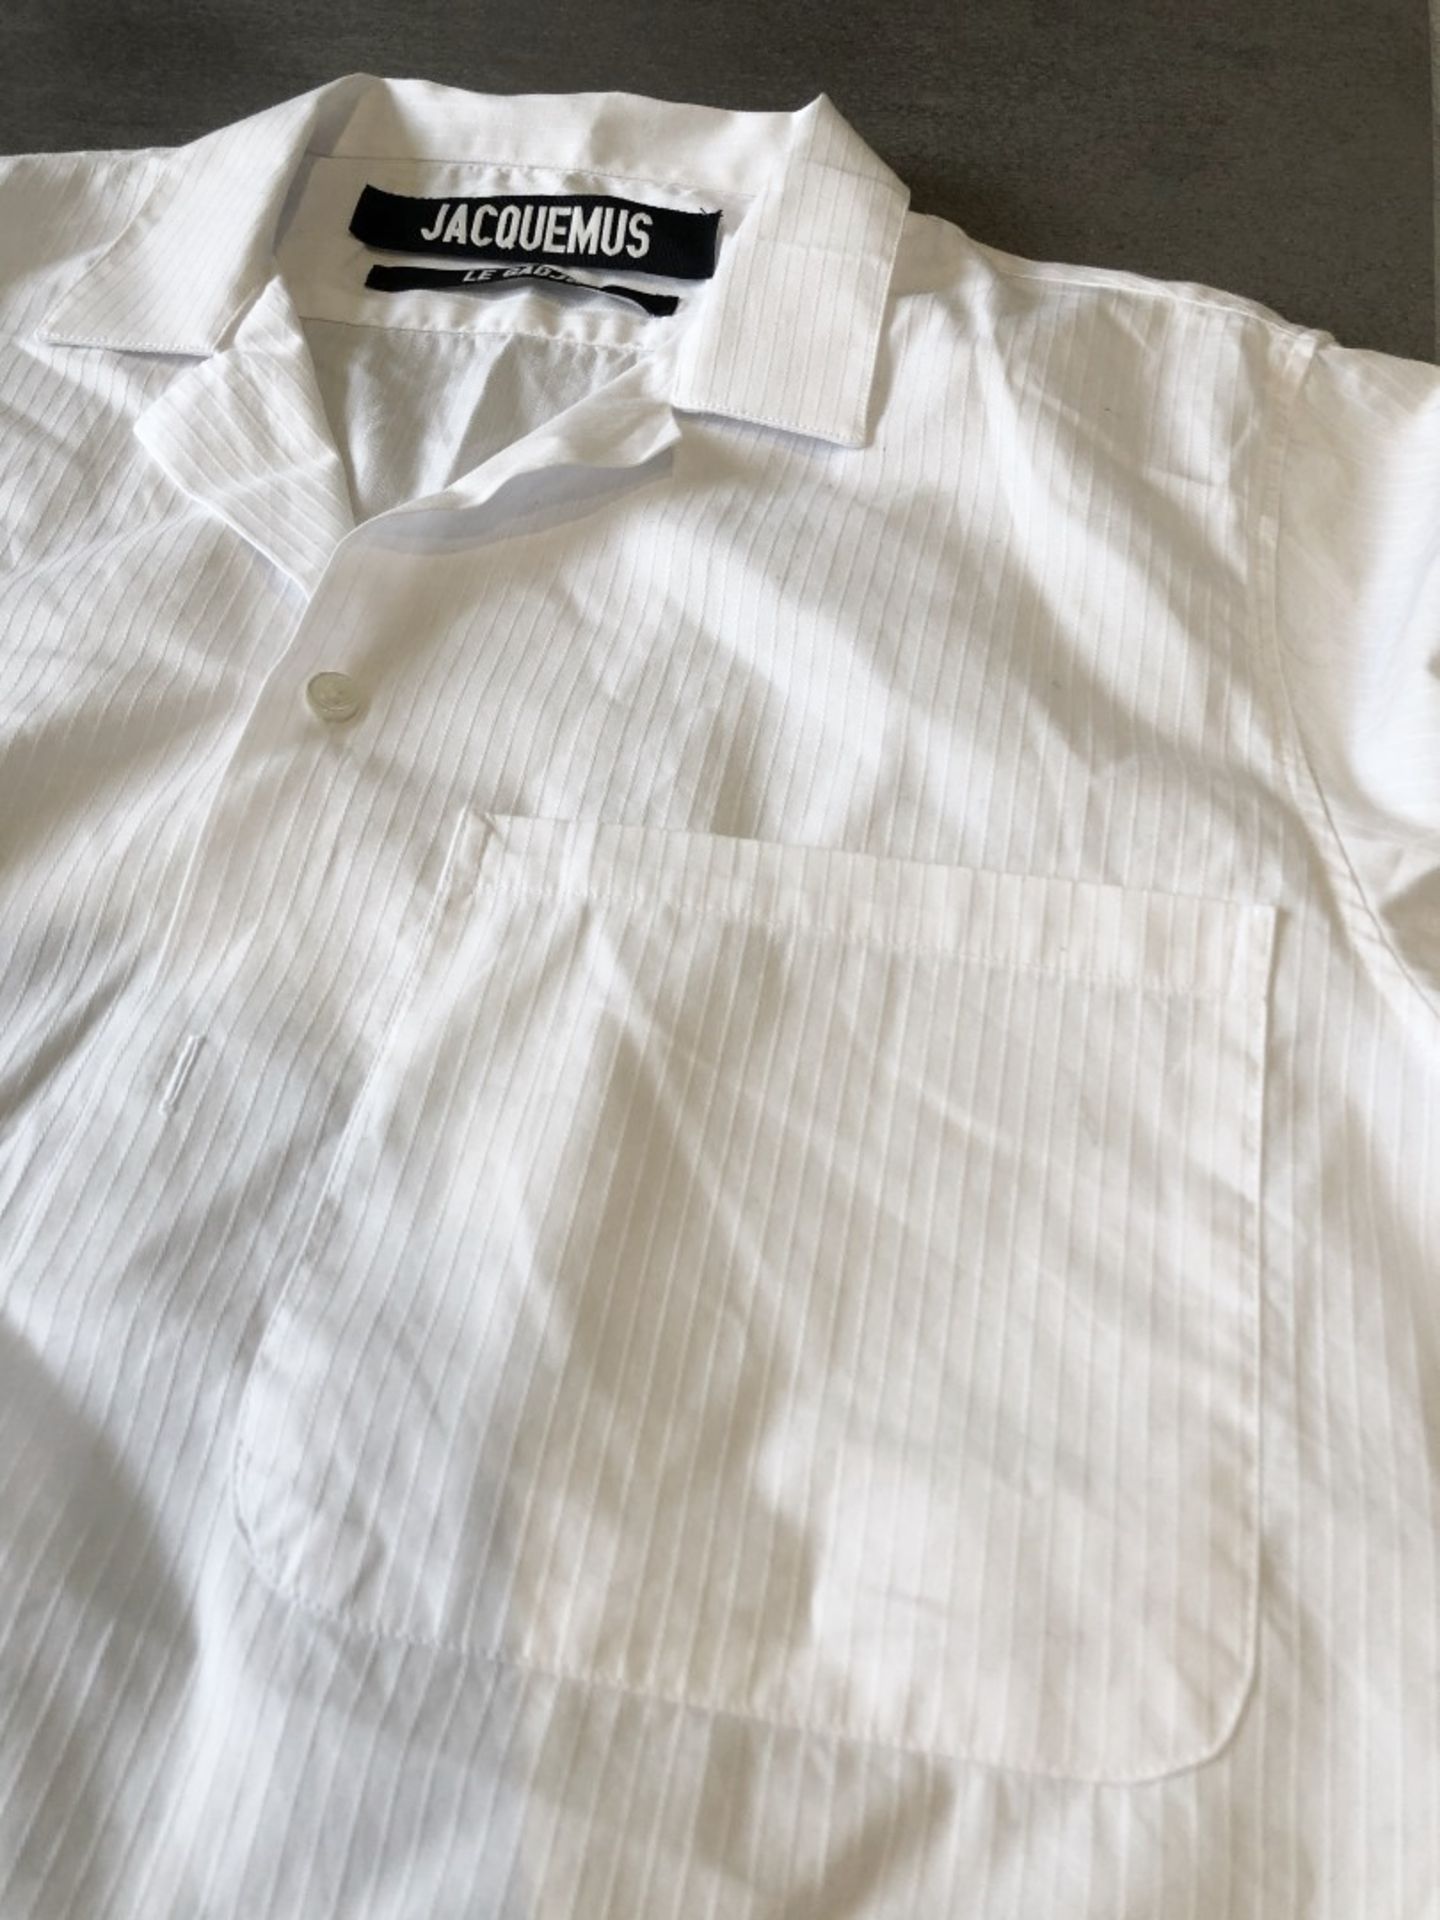 1 x Men's Genuine Jaquemus Designer Short Sleeve Shirt In White - Size: LARGE - RRP £250.00 - Image 2 of 7